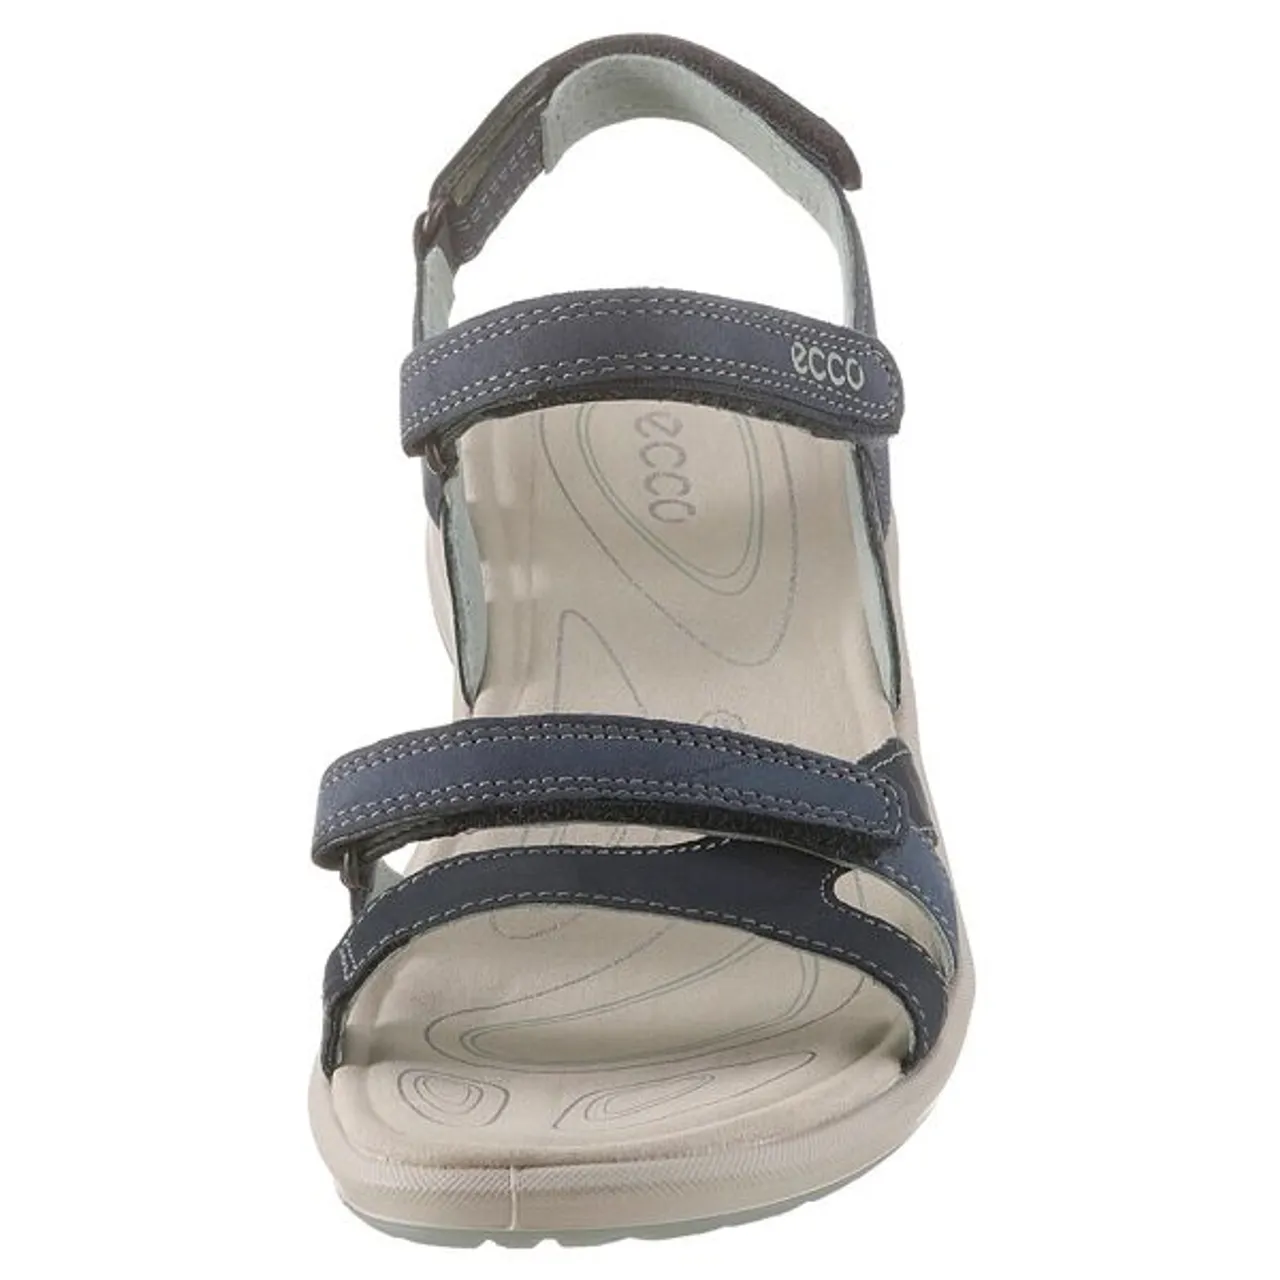 Riemchensandale ECCO "CRUISE" Gr. 41, grau (dunkelblau, grau) Damen Schuhe Sandalen